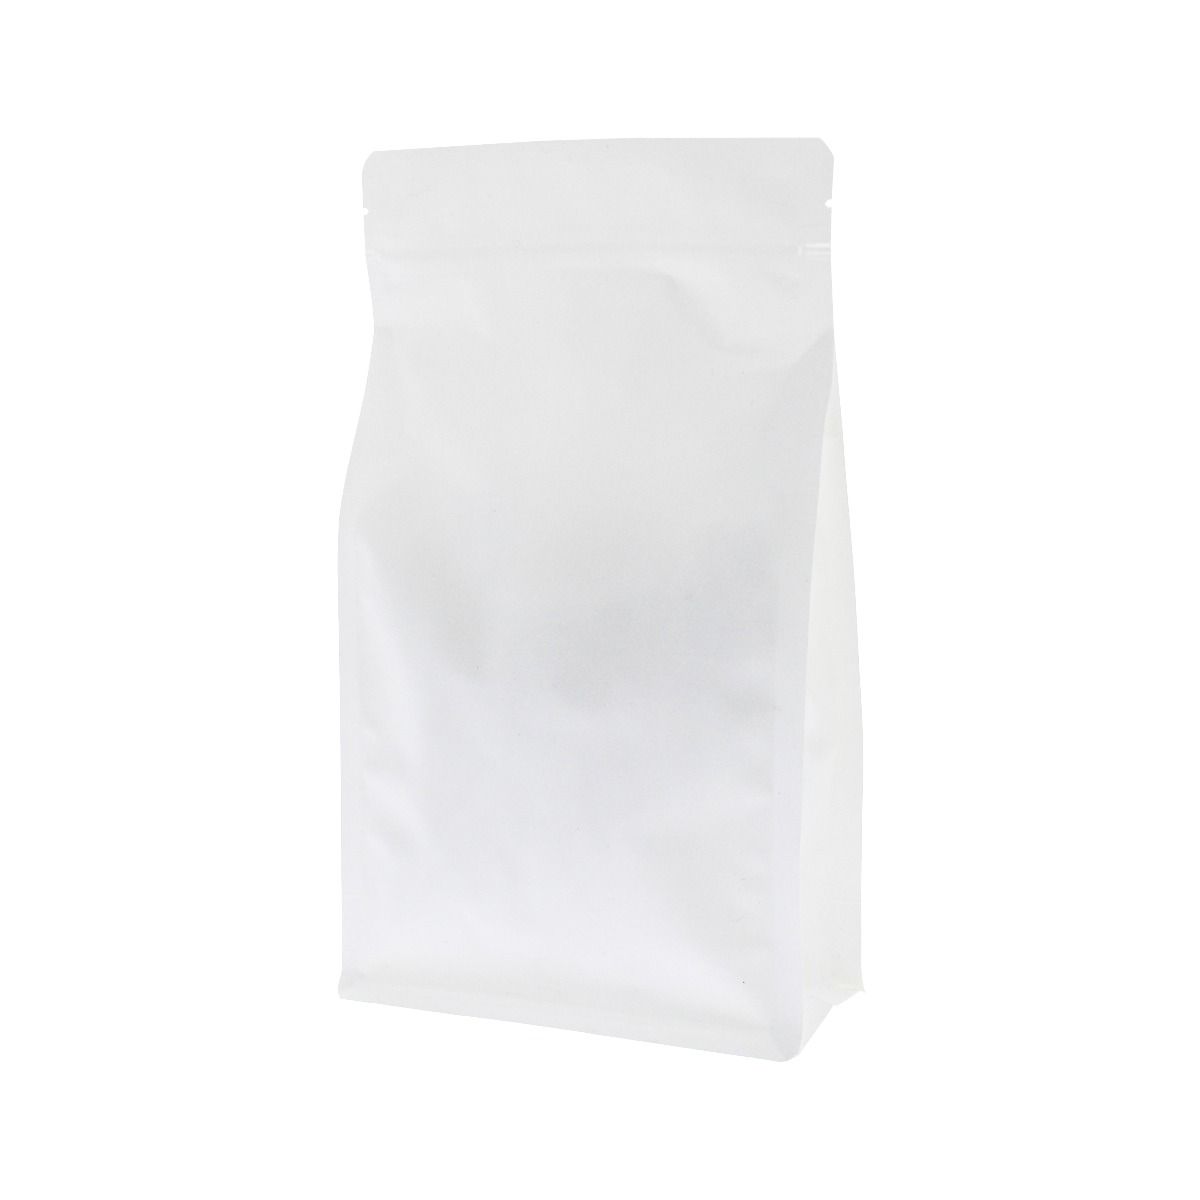 Flat bottom pouch with zipper - matt white (100% recyclable)